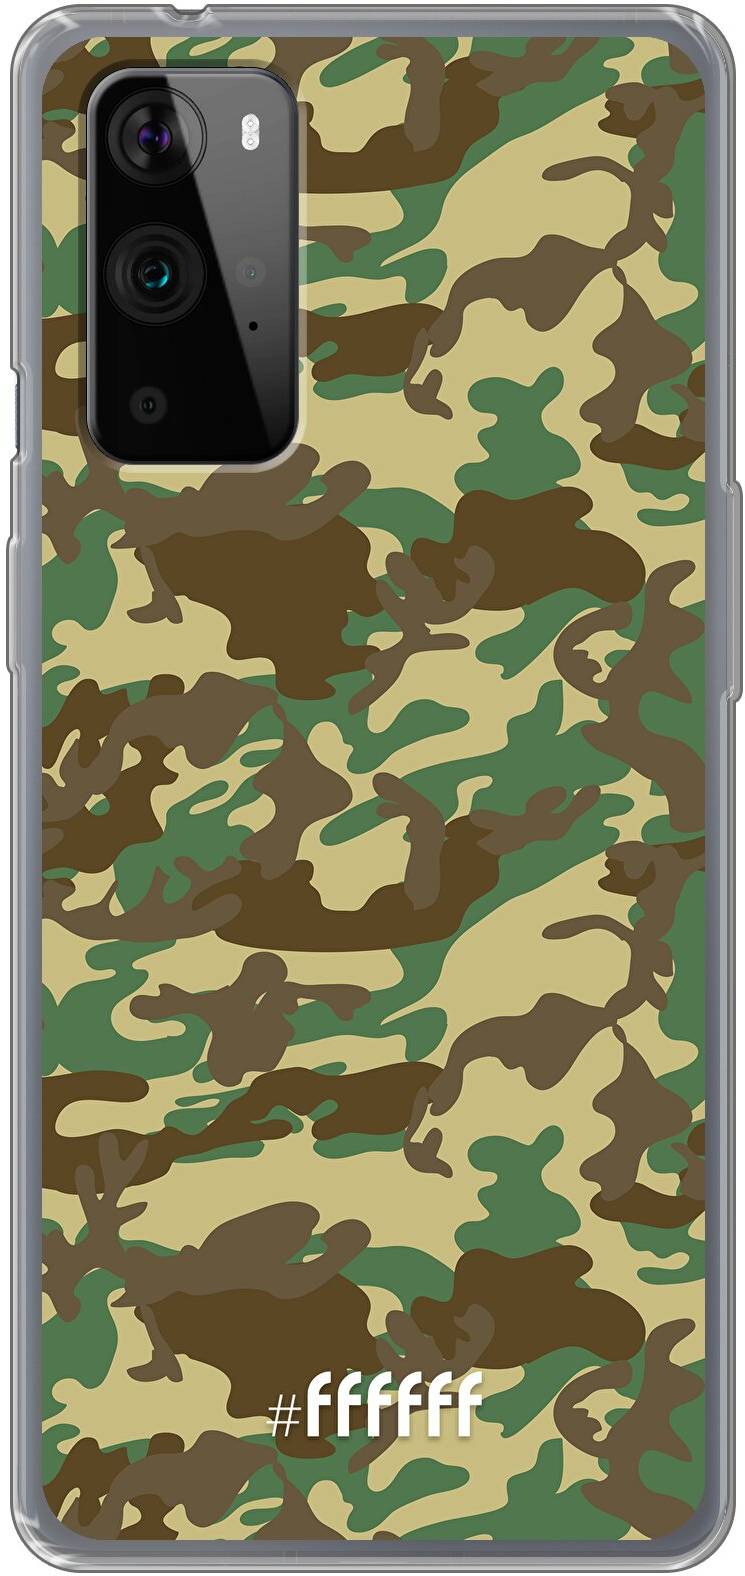 Jungle Camouflage 9 Pro